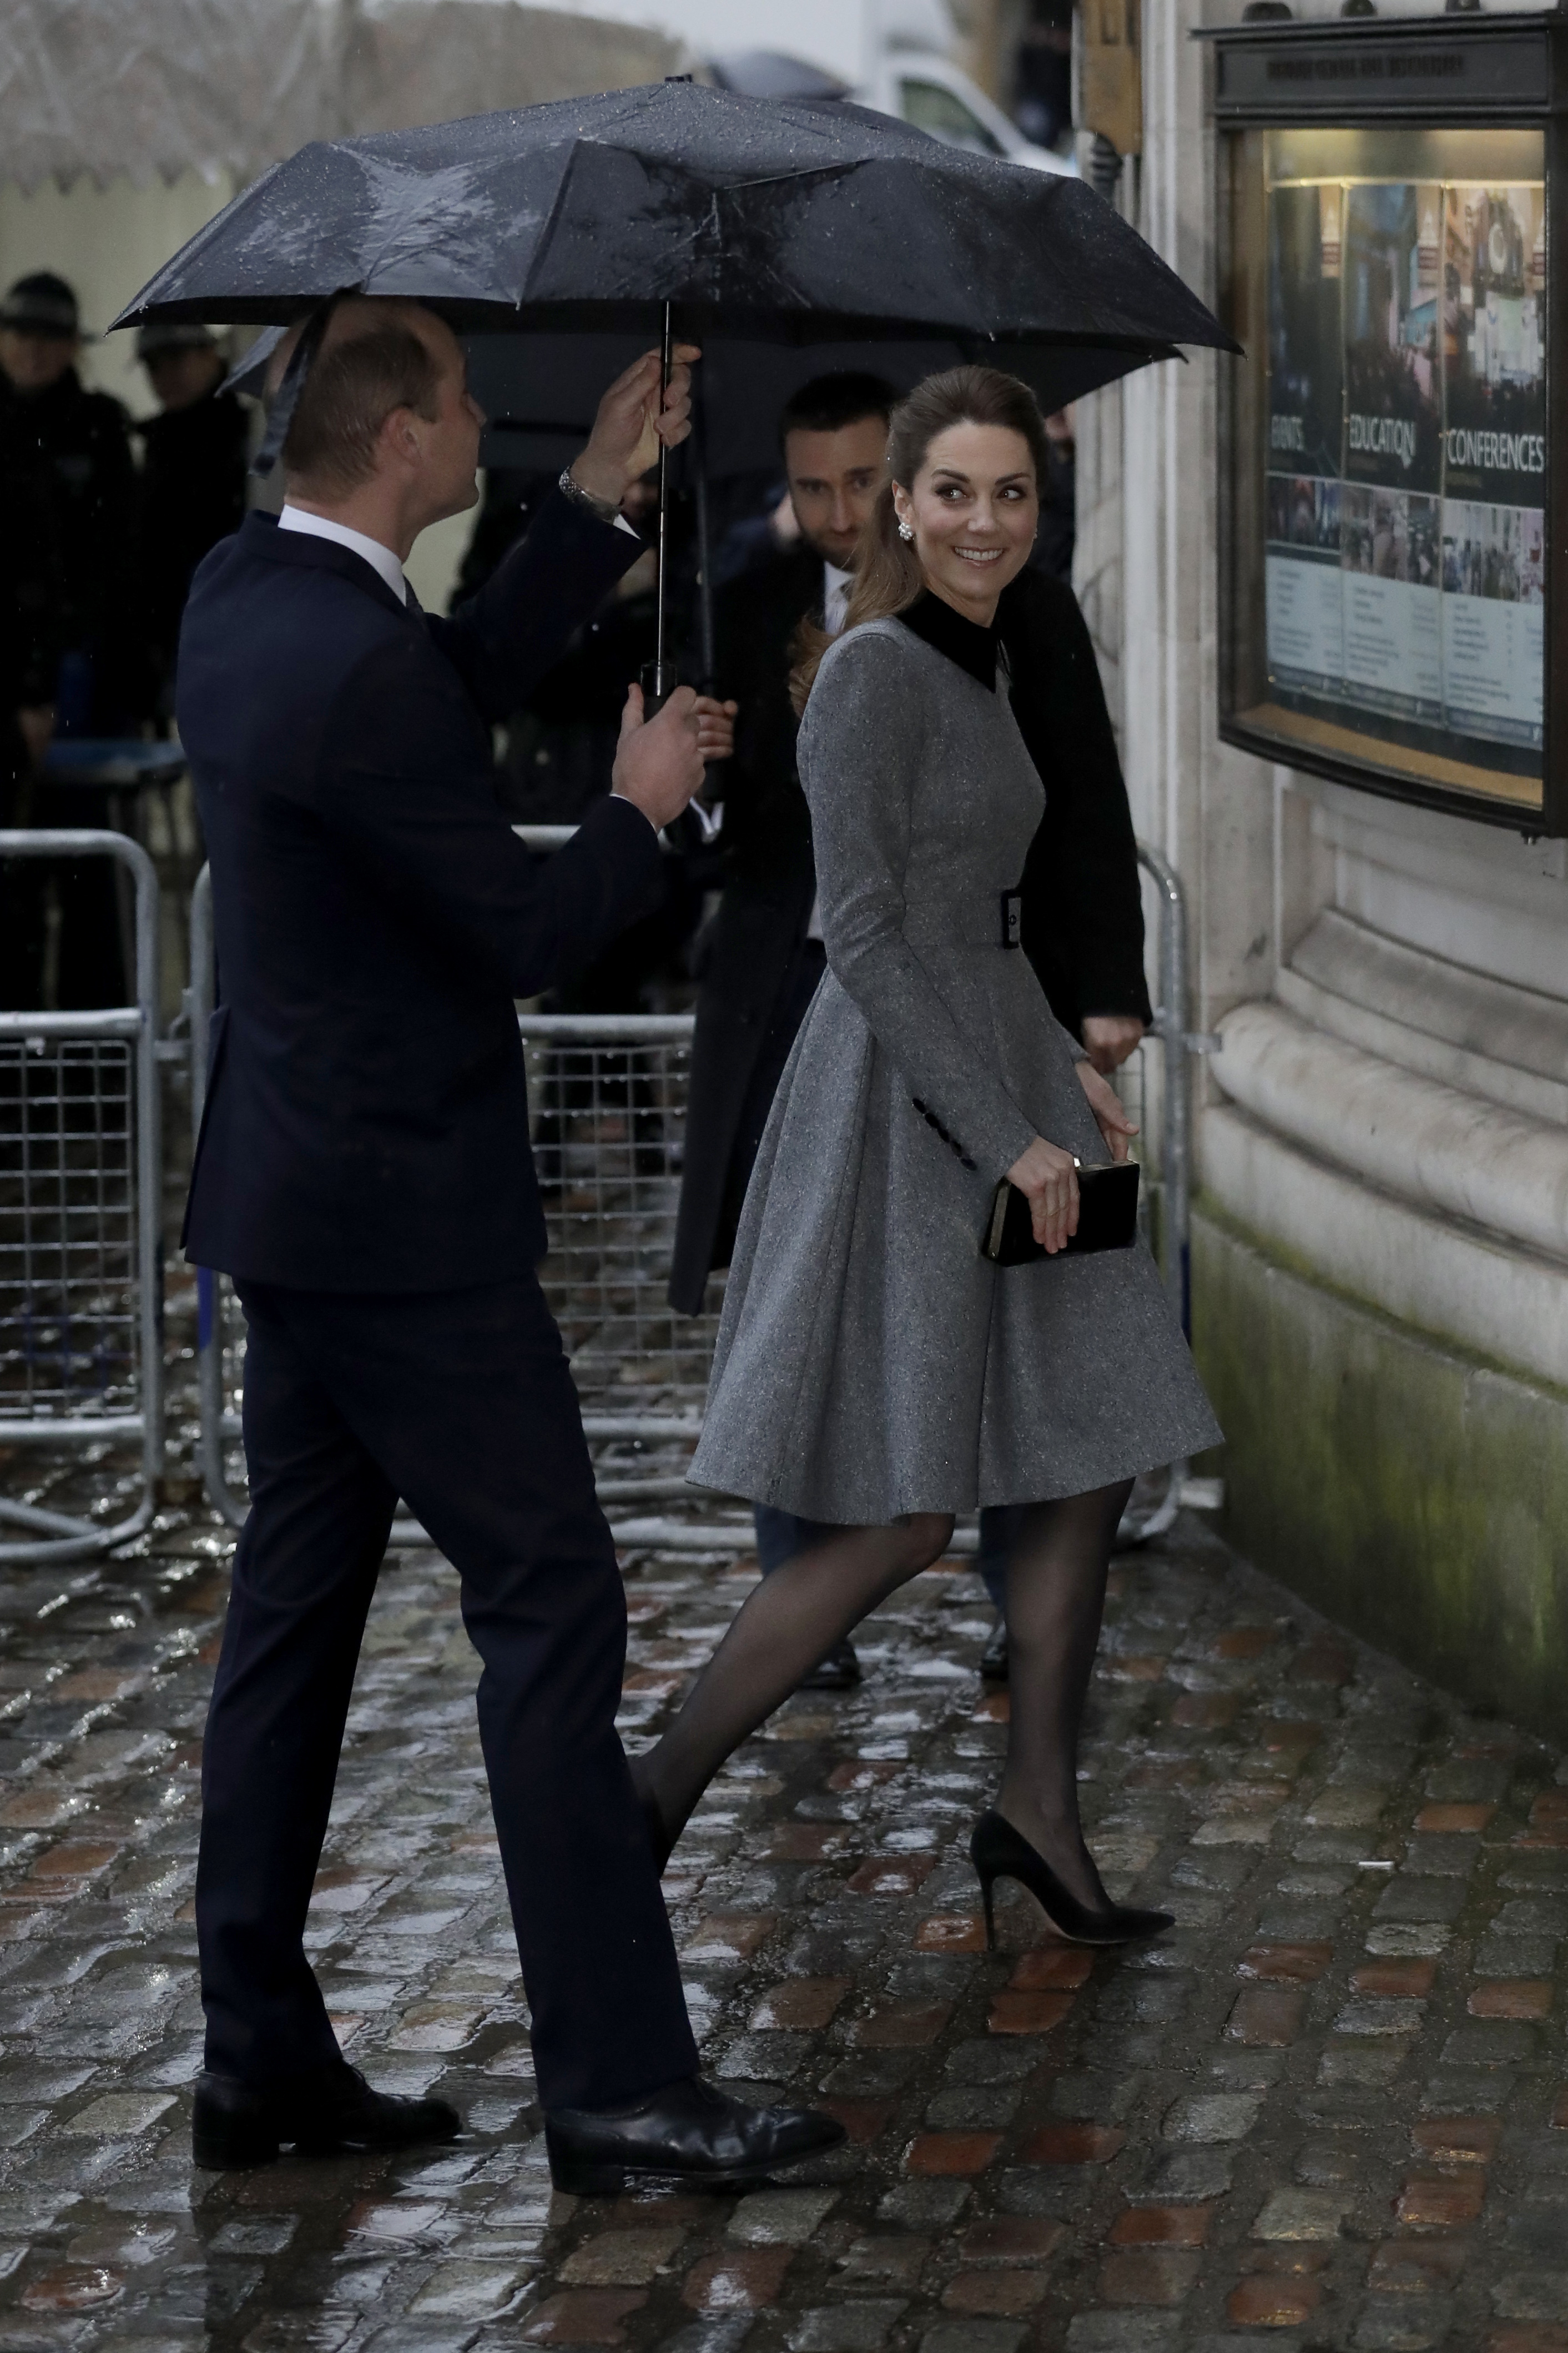 Mία μέρα που έβρεχε καταρρακτωδώς η Kate Middleton έκανε μία πολύ τολμηρή κίνηση και φόρεσε...